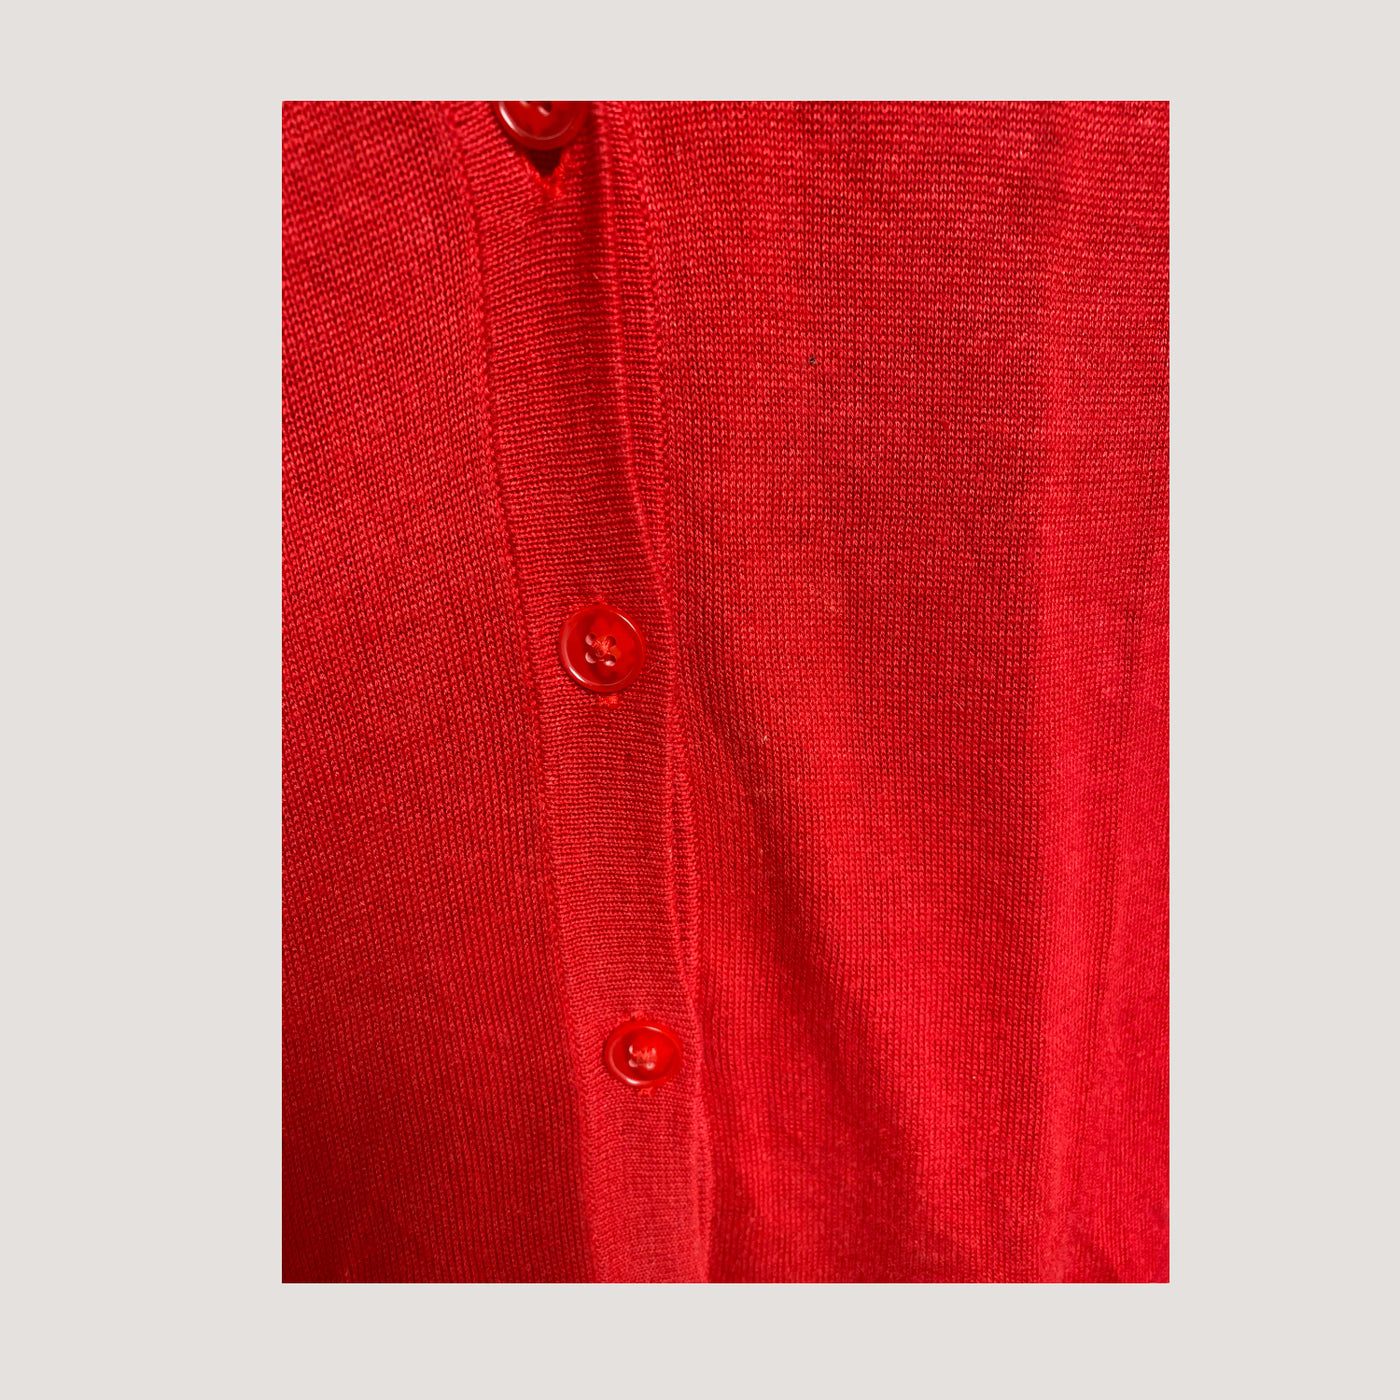 Marimekko livivee cardigan, red | Woman S